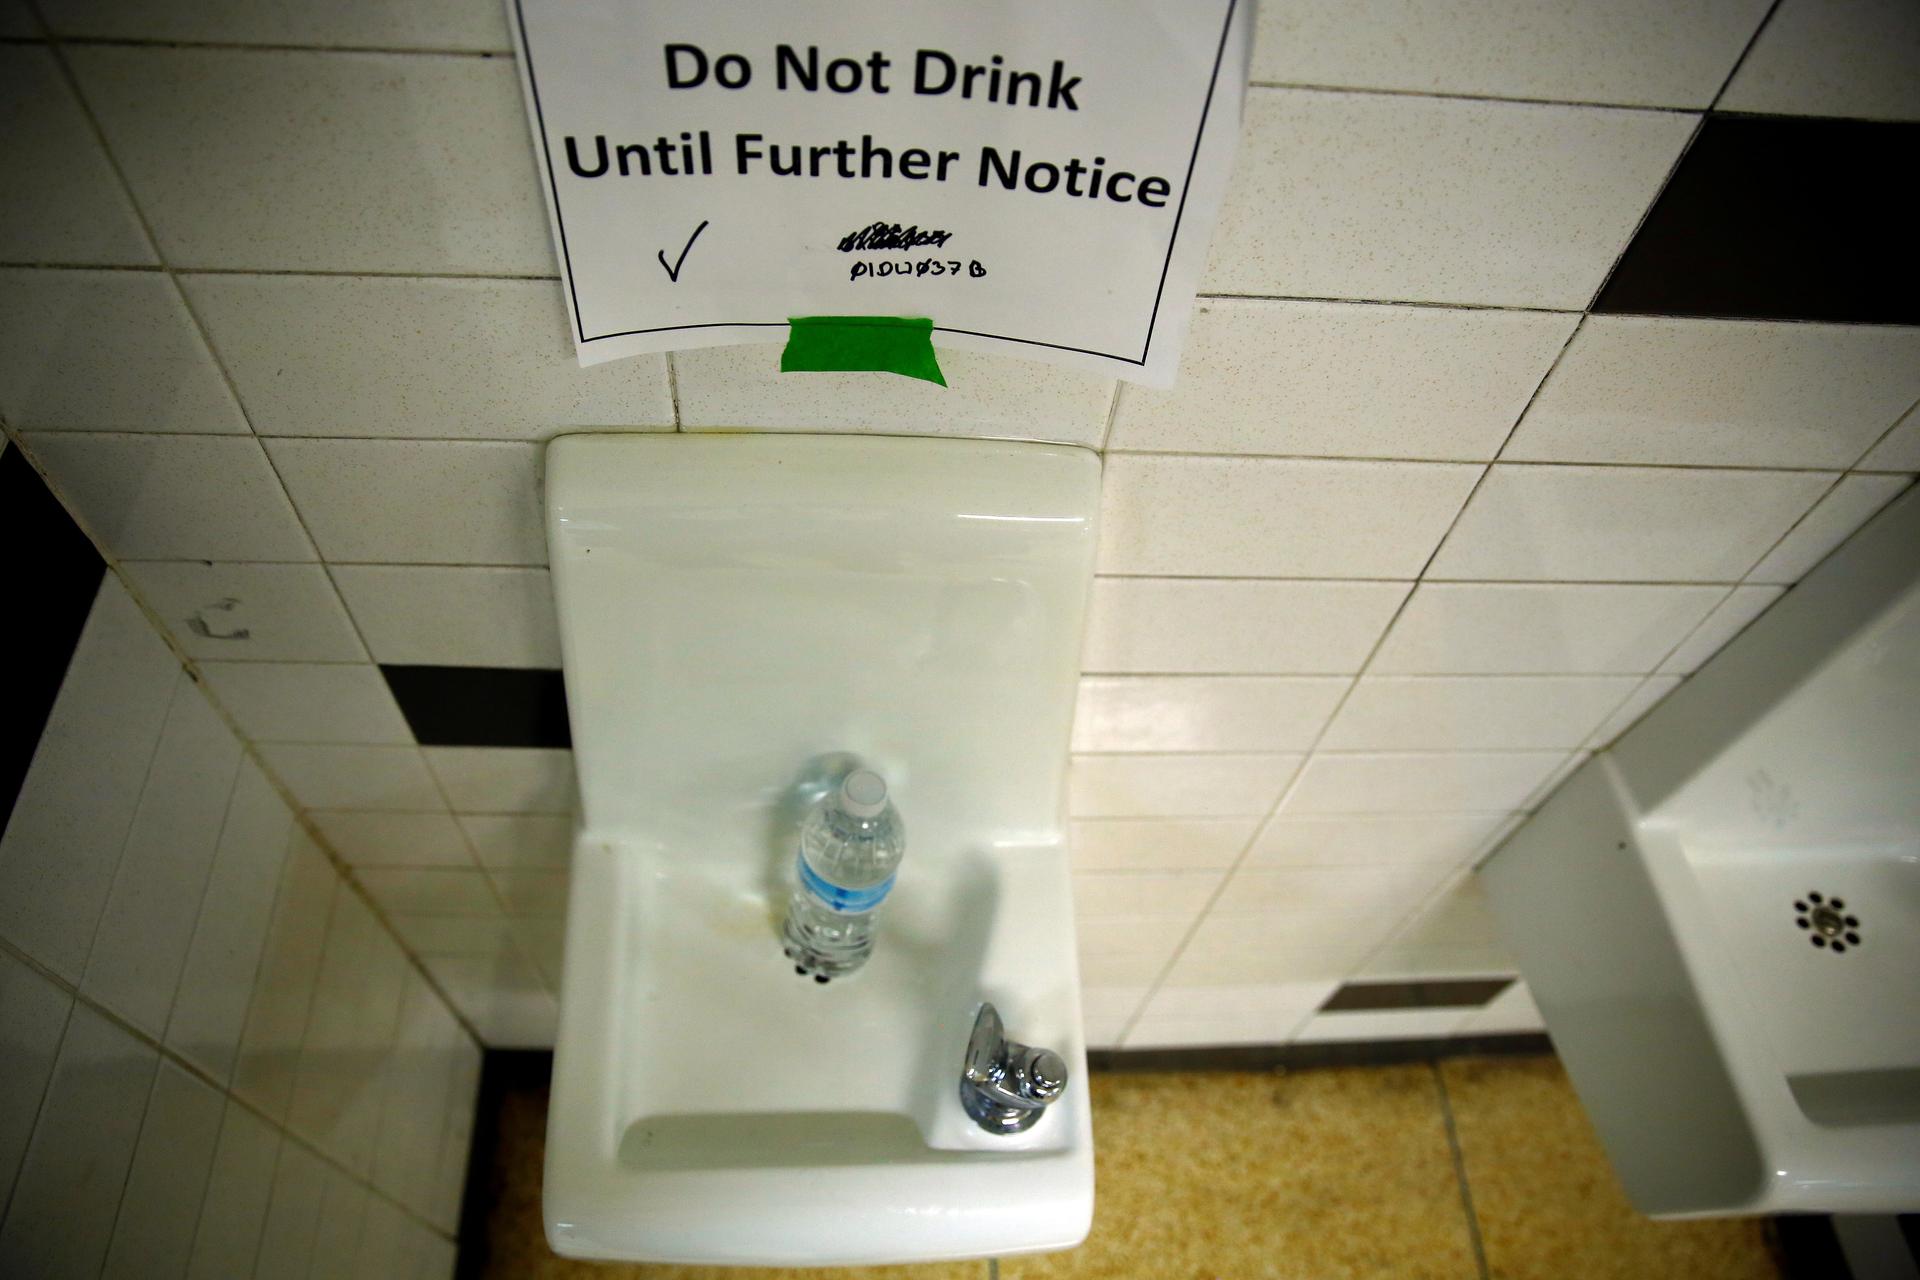 A sign is seen next to a water dispenser at a high school in Flint